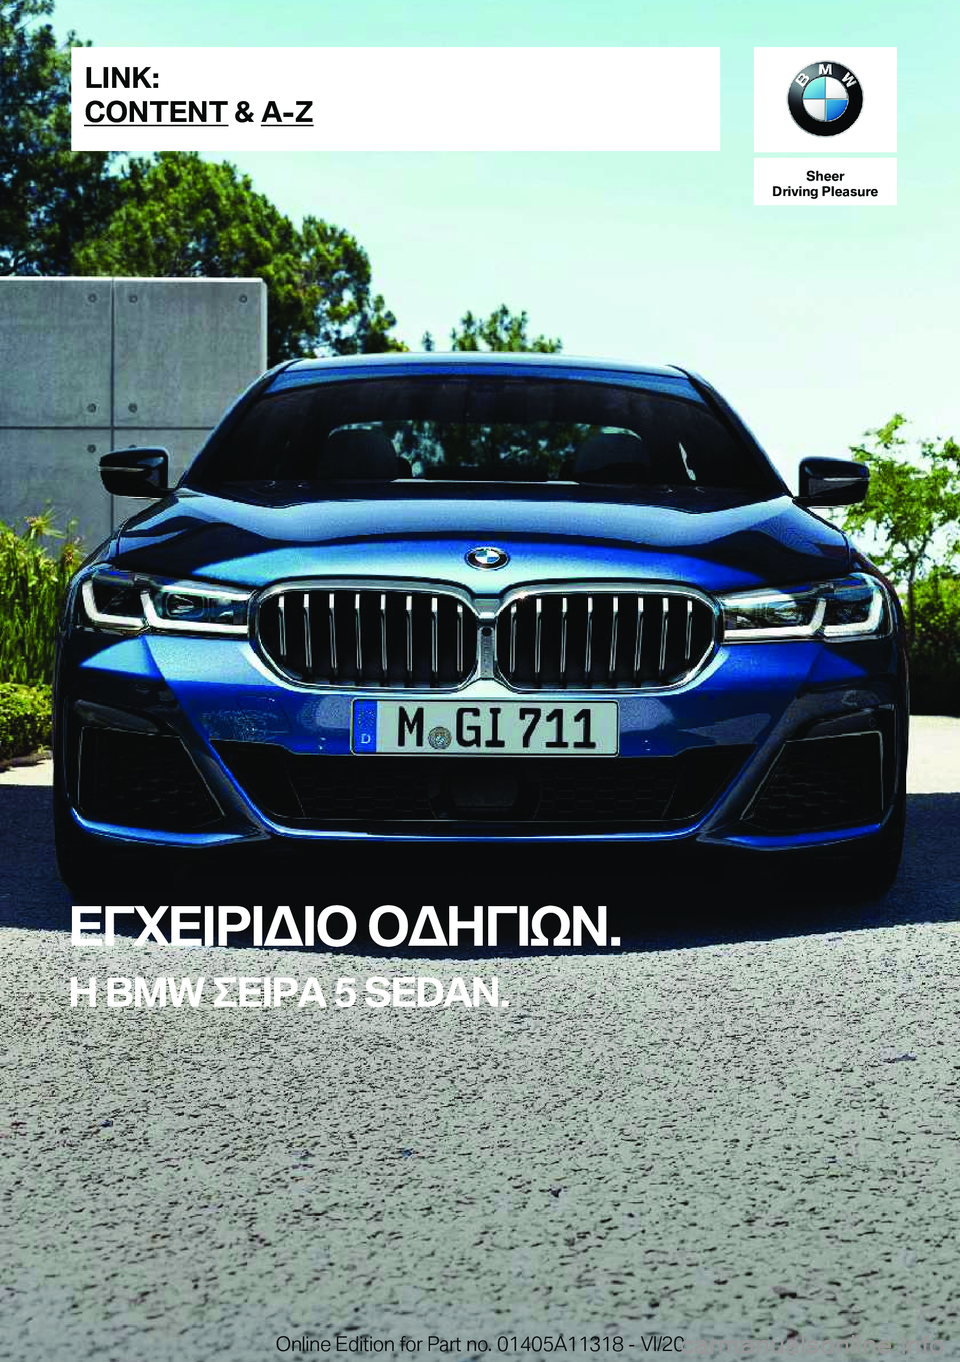 BMW 5 SERIES 2021  ΟΔΗΓΌΣ ΧΡΉΣΗΣ (in Greek) �S�h�e�e�r
�D�r�i�v�i�n�g��P�l�e�a�s�u�r�e
XViX=d=W=b�bWZV=kA�.
Z��B�M�W�eX=dT��5��S�E�D�A�N�.�L�I�N�K�:
�C�O�N�T�E�N�T��&��A�-�Z�O�n�l�i�n�e��E�d�i�t�i�o�n��f�o�r��P